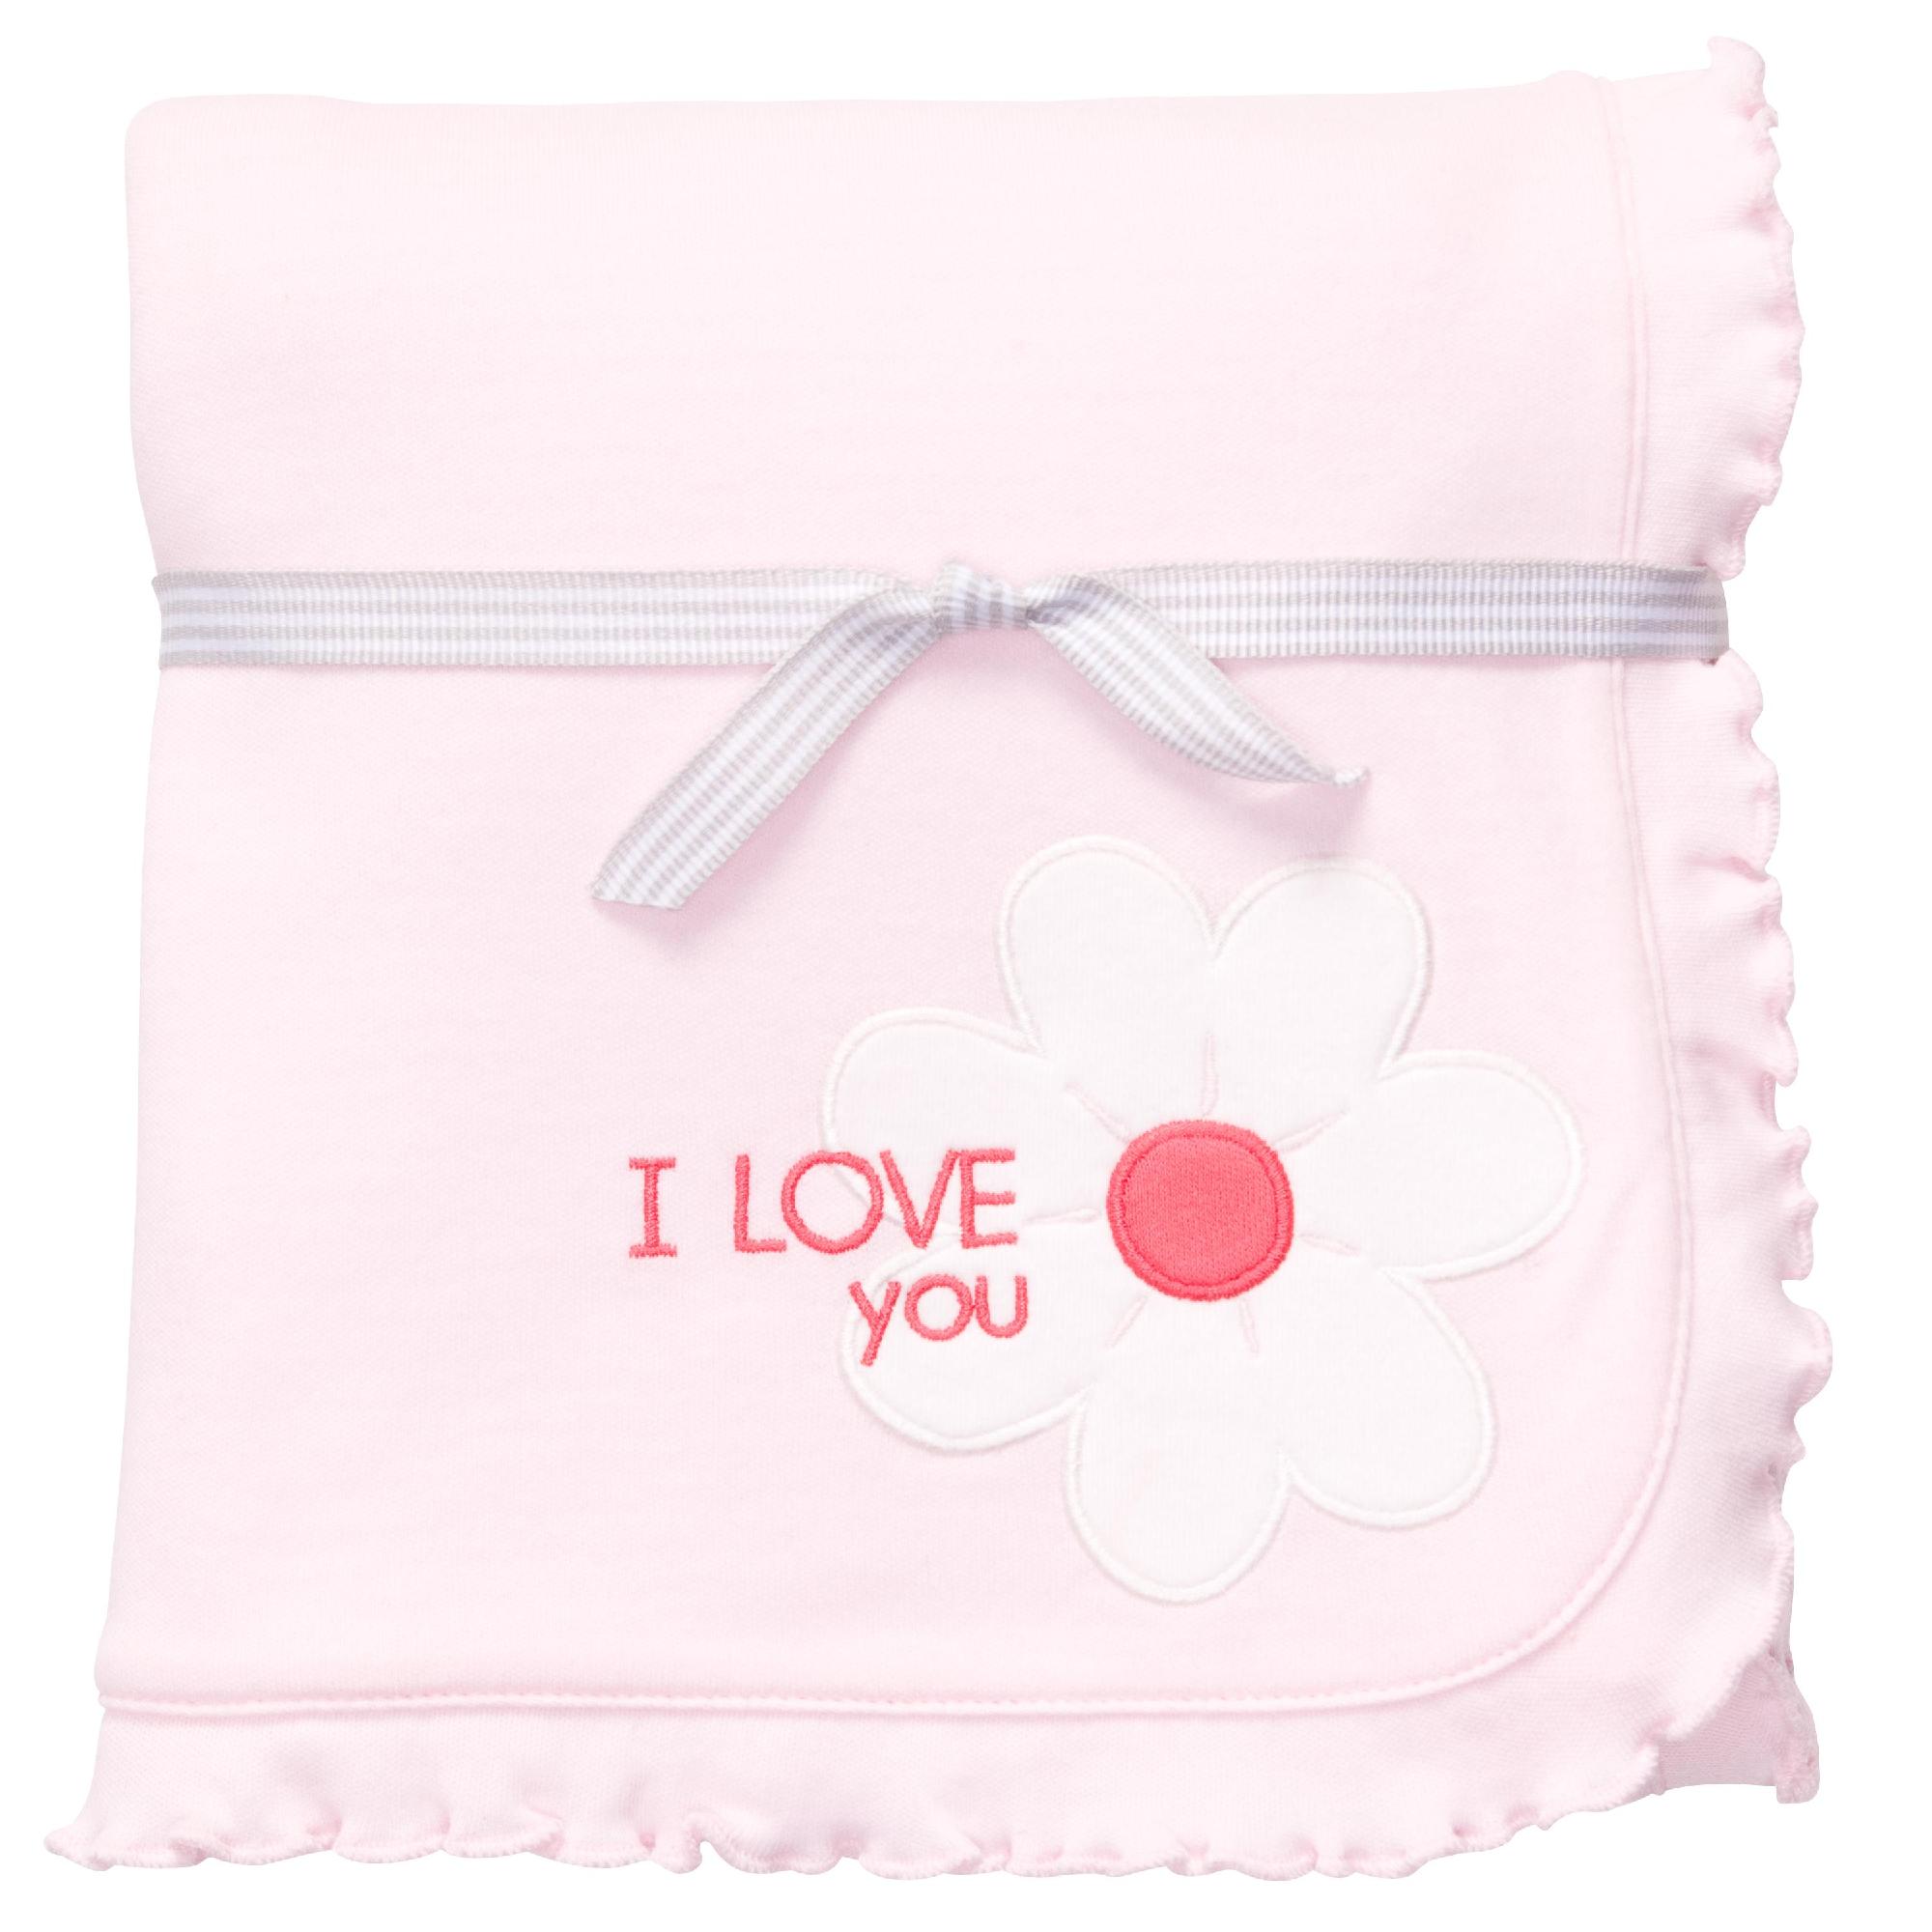 Carter's Infant Girl's Blanket - I Love You